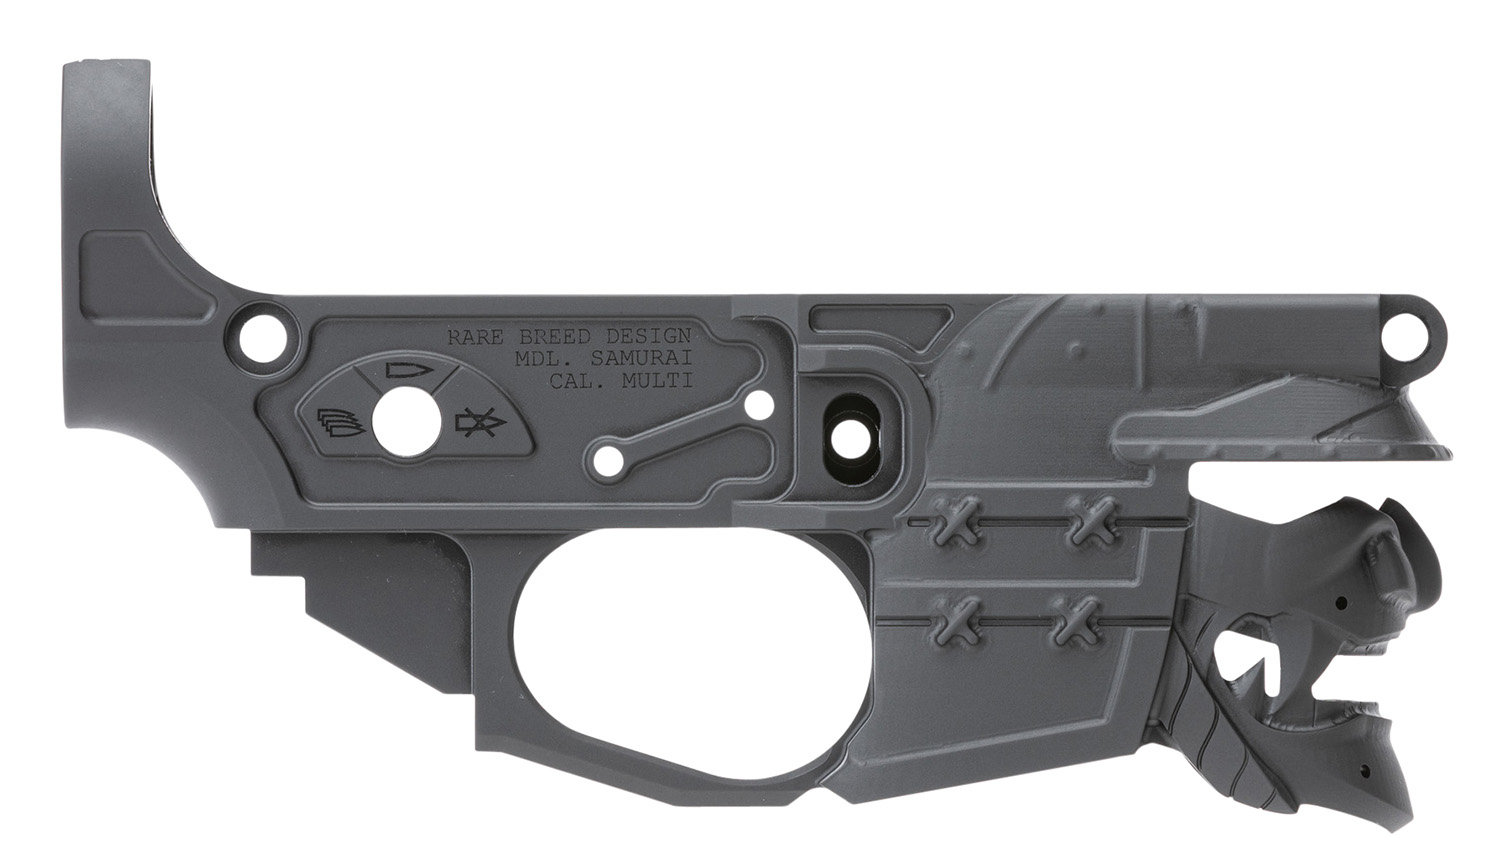 Spikes STLB630 Rare Breed Samurai Stripped Lower Receiver Multi-Caliber 7075-T6 Aluminum Black Anodized for AR-15